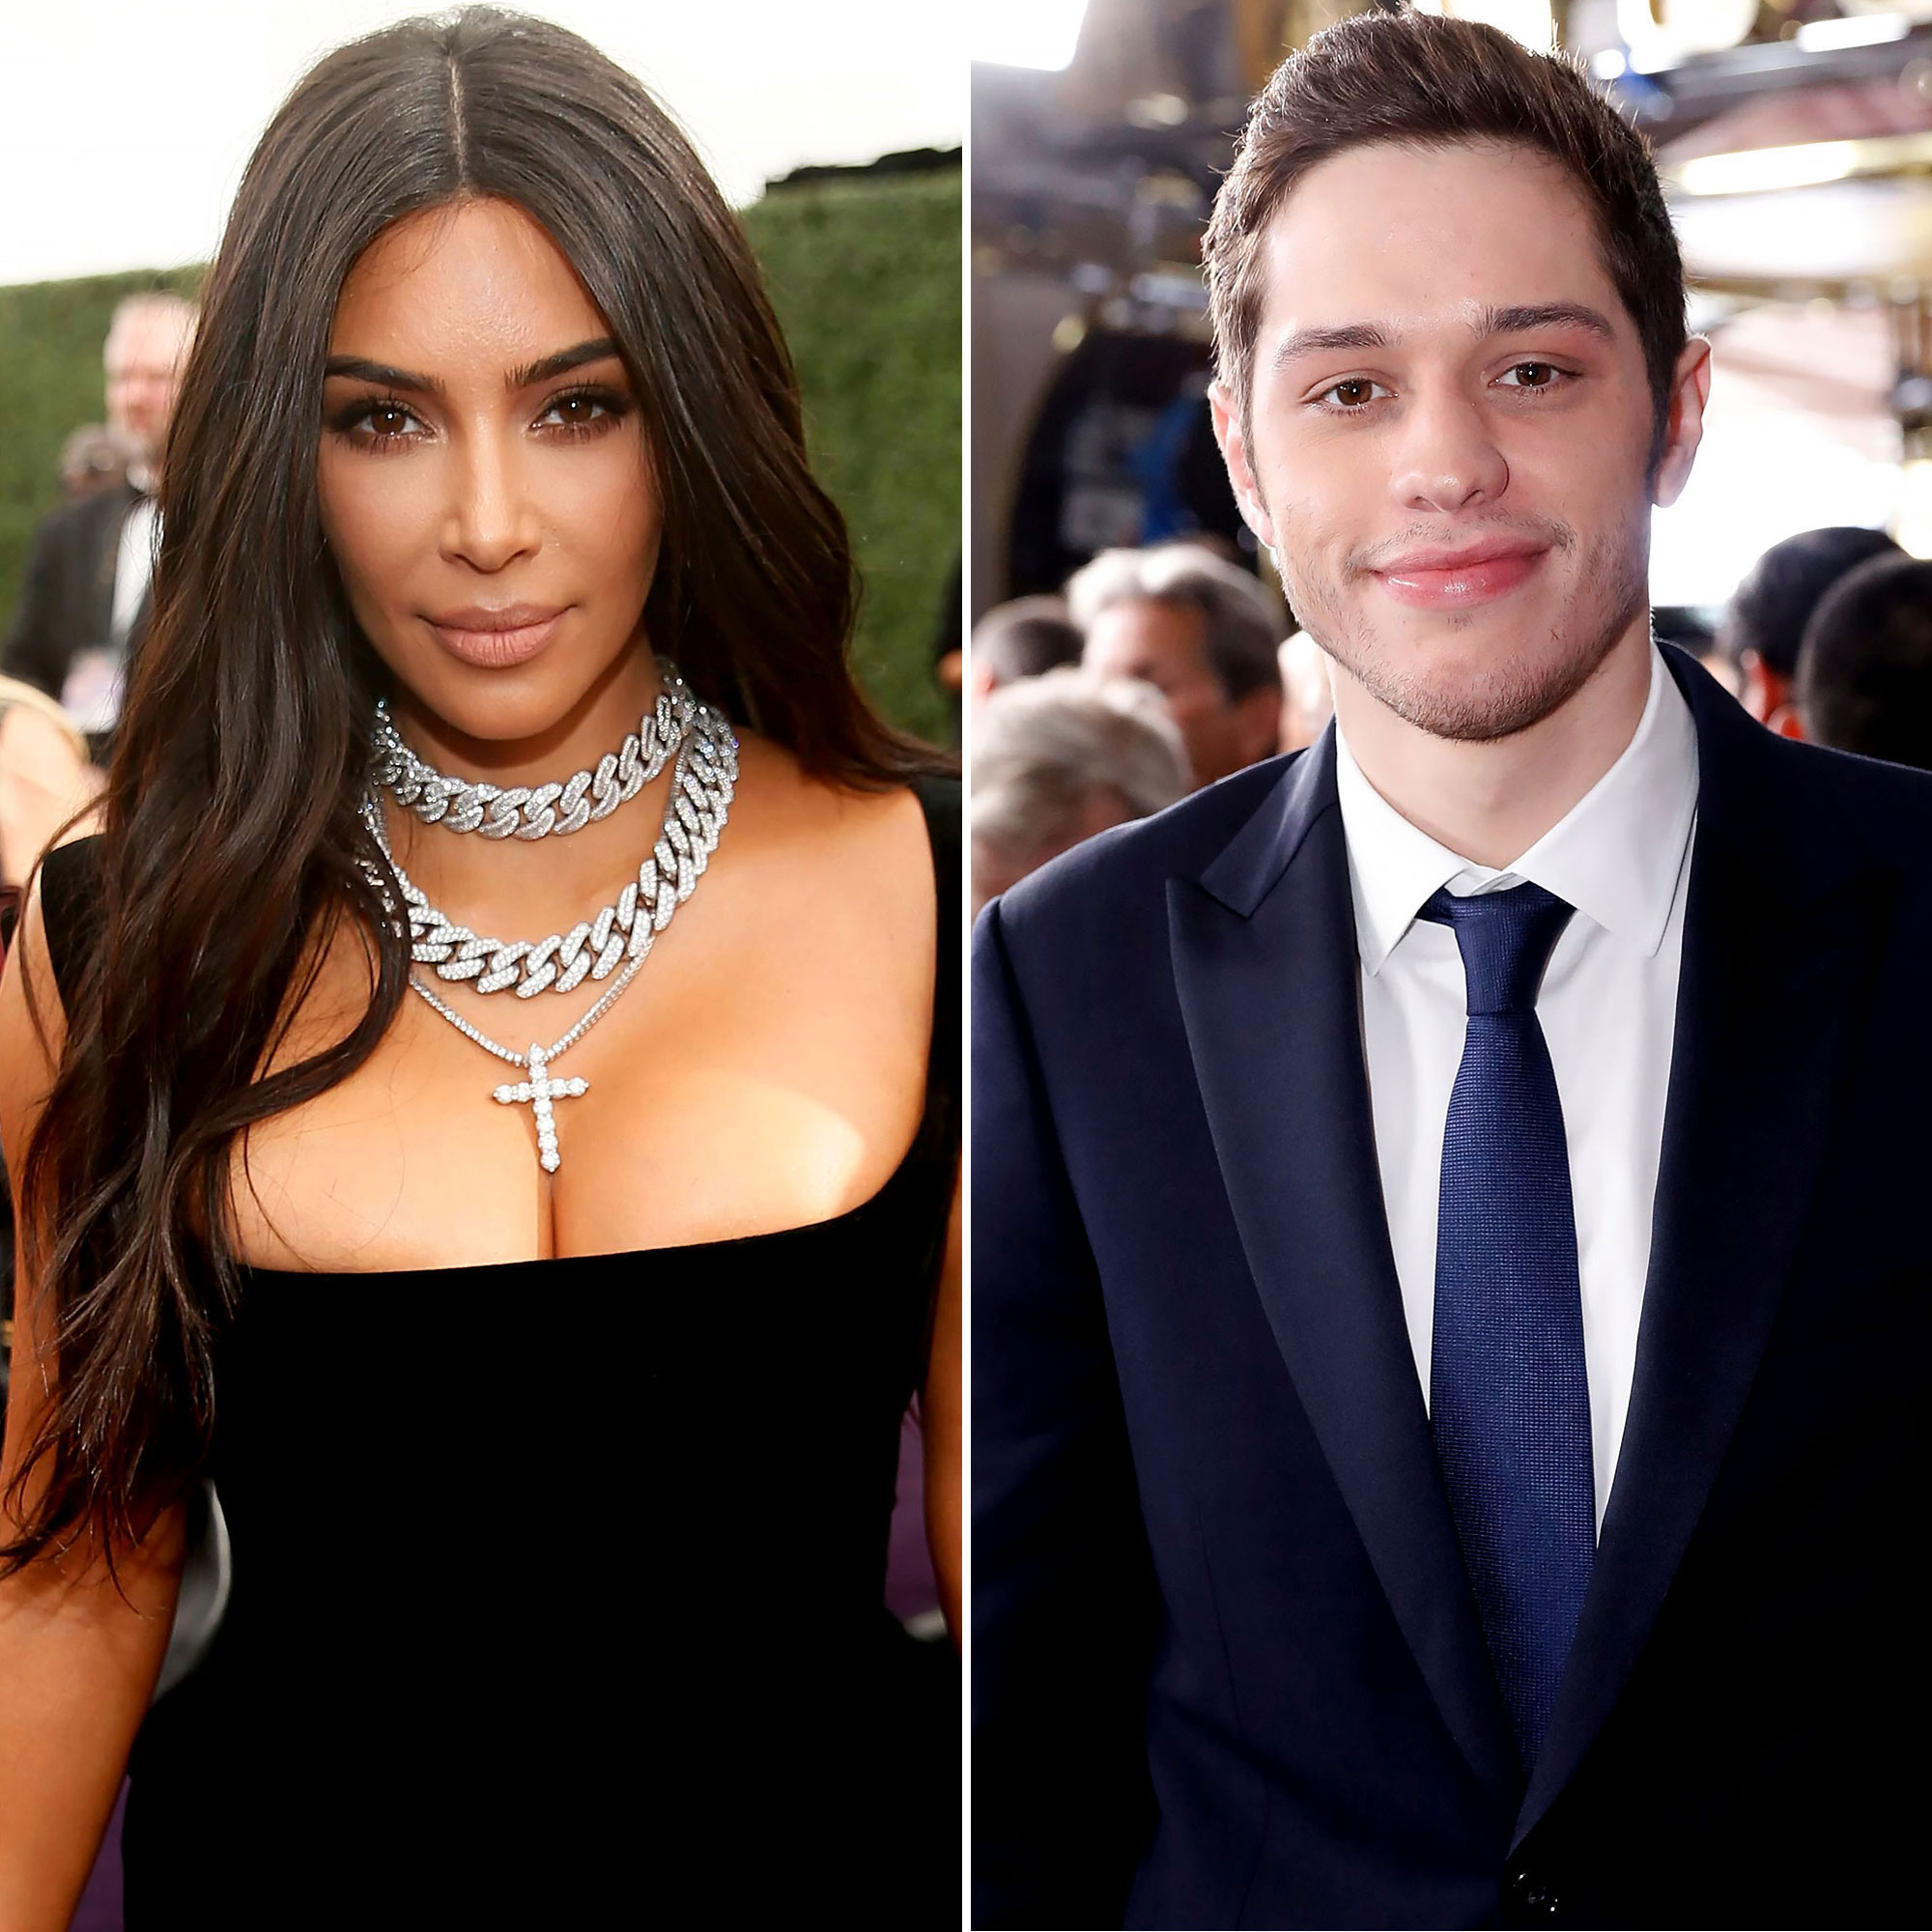 Pete Davidson Took Kim Kardashian's Love of Branding Very Literally